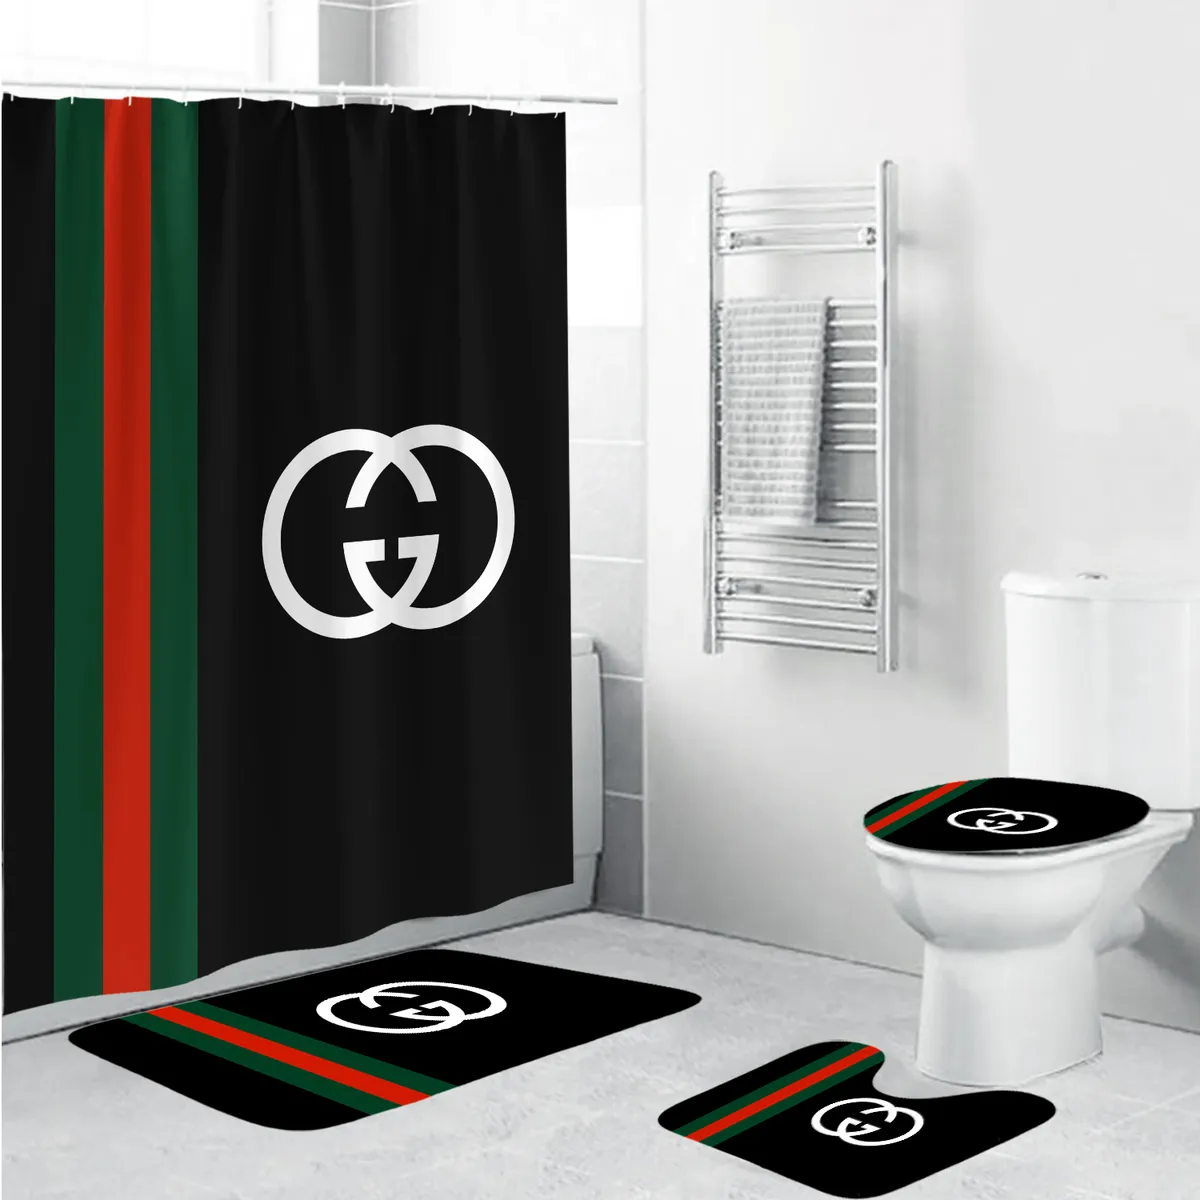 Gucci Black Bathroom Set Luxury Fashion Brand Hypebeast Home Decor Bath Mat